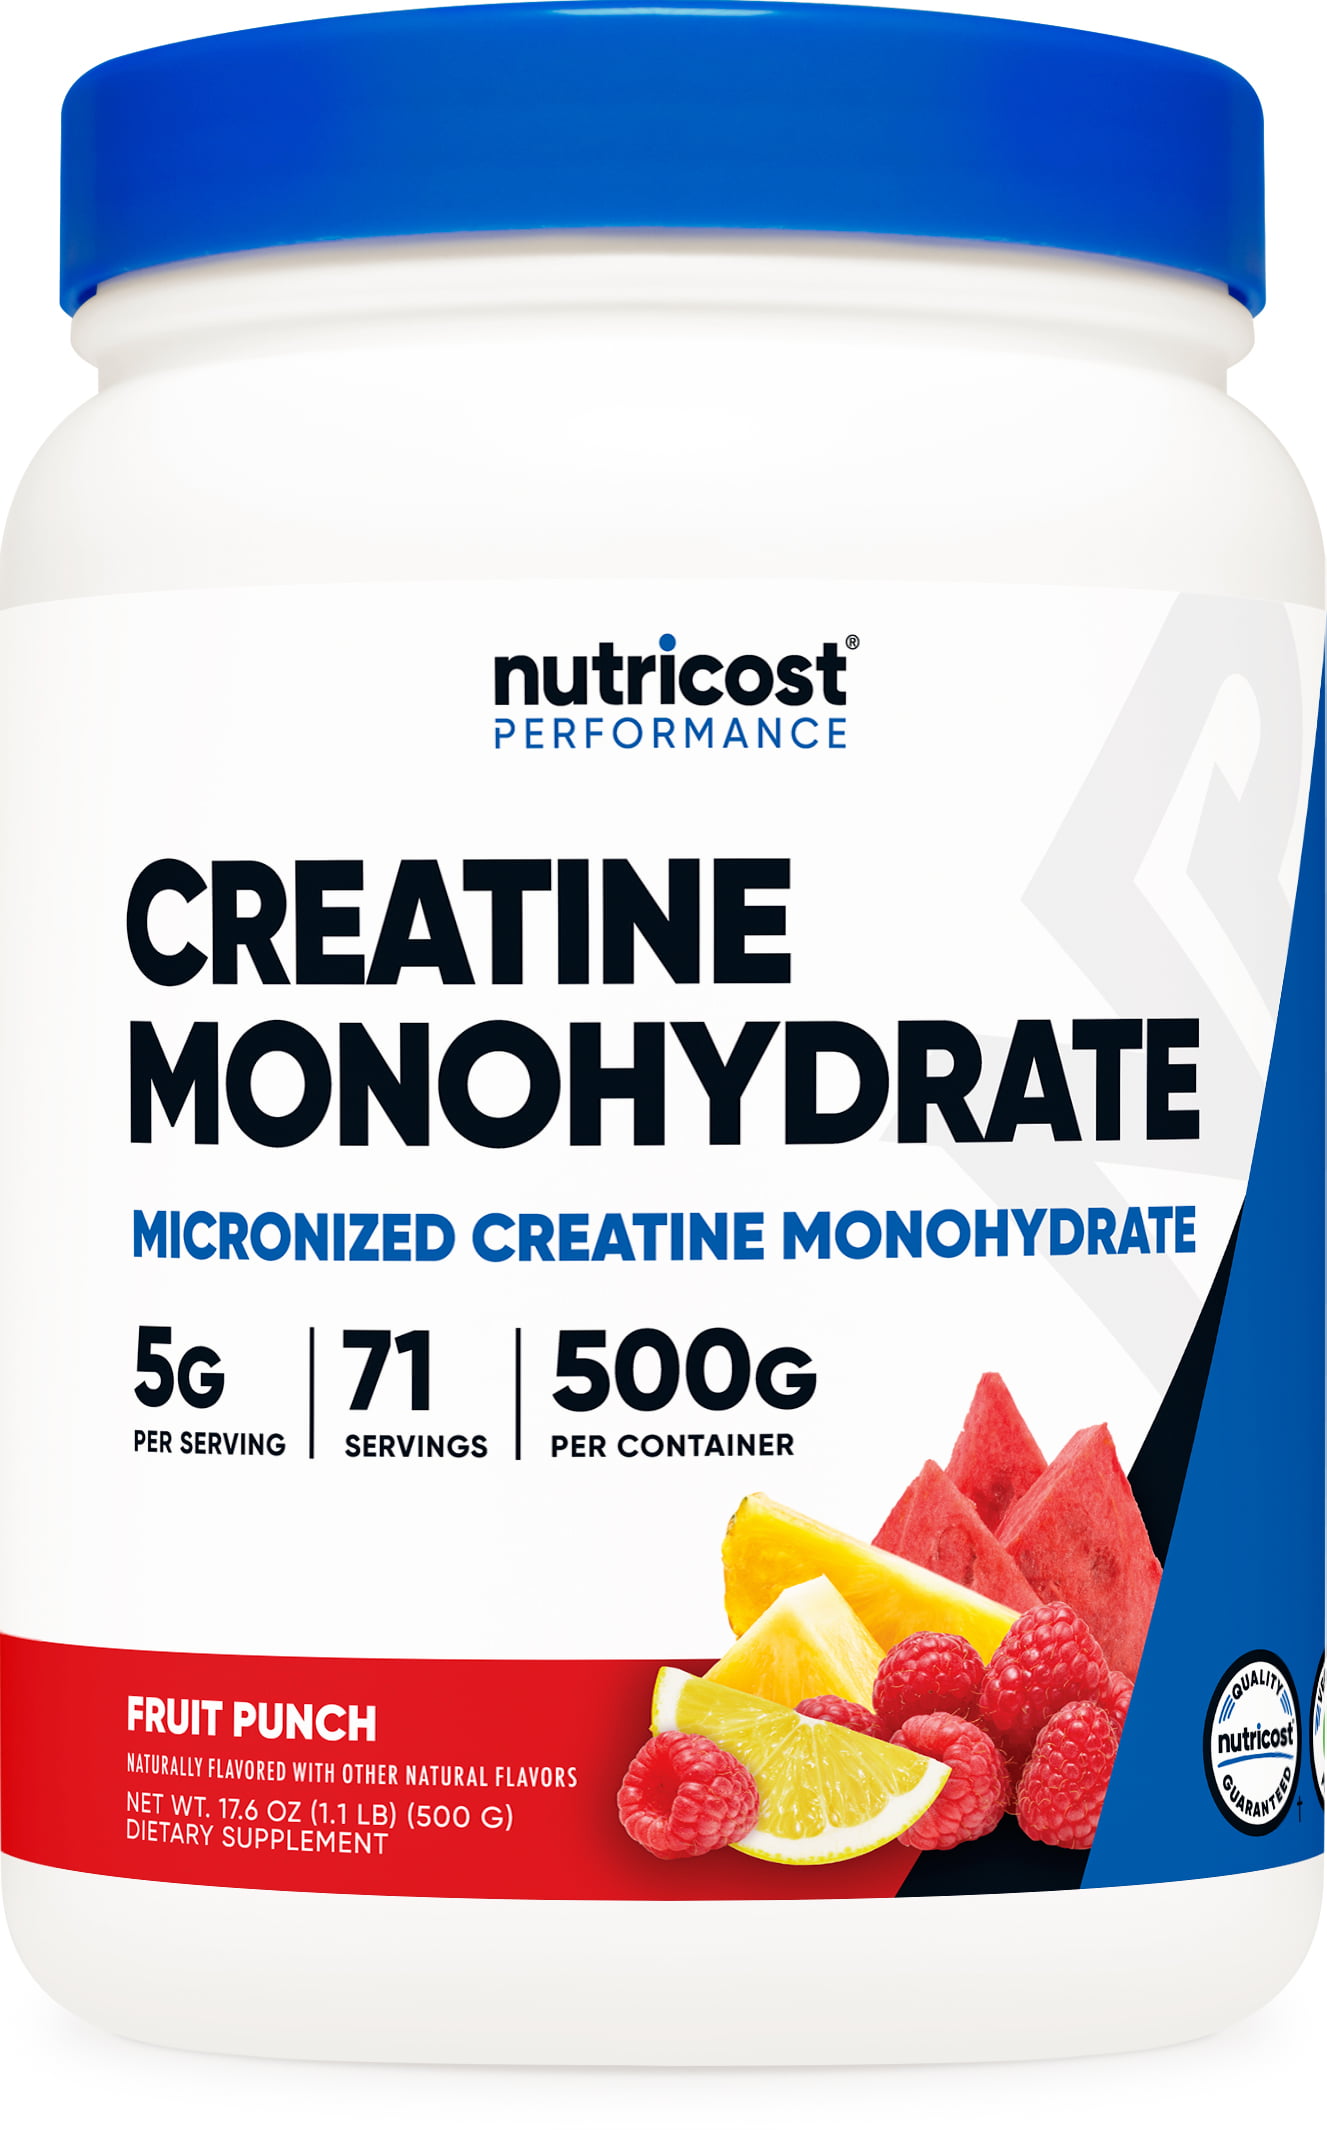 Pure Nutricost Creapure Creatine Monohydrate 1kg High Quality Powder 